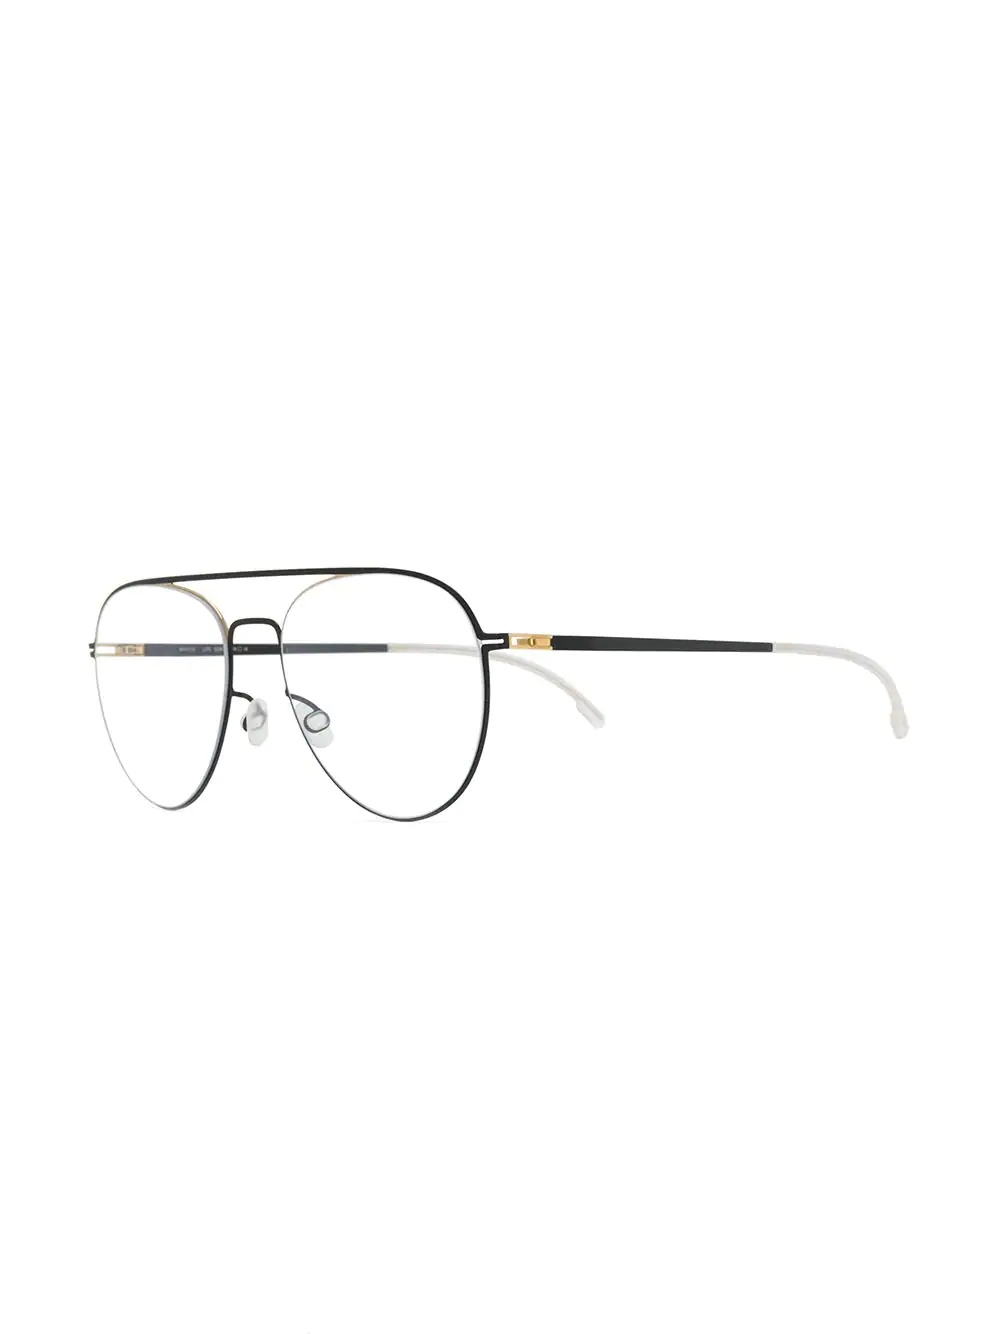 aviator-style glasses - 2